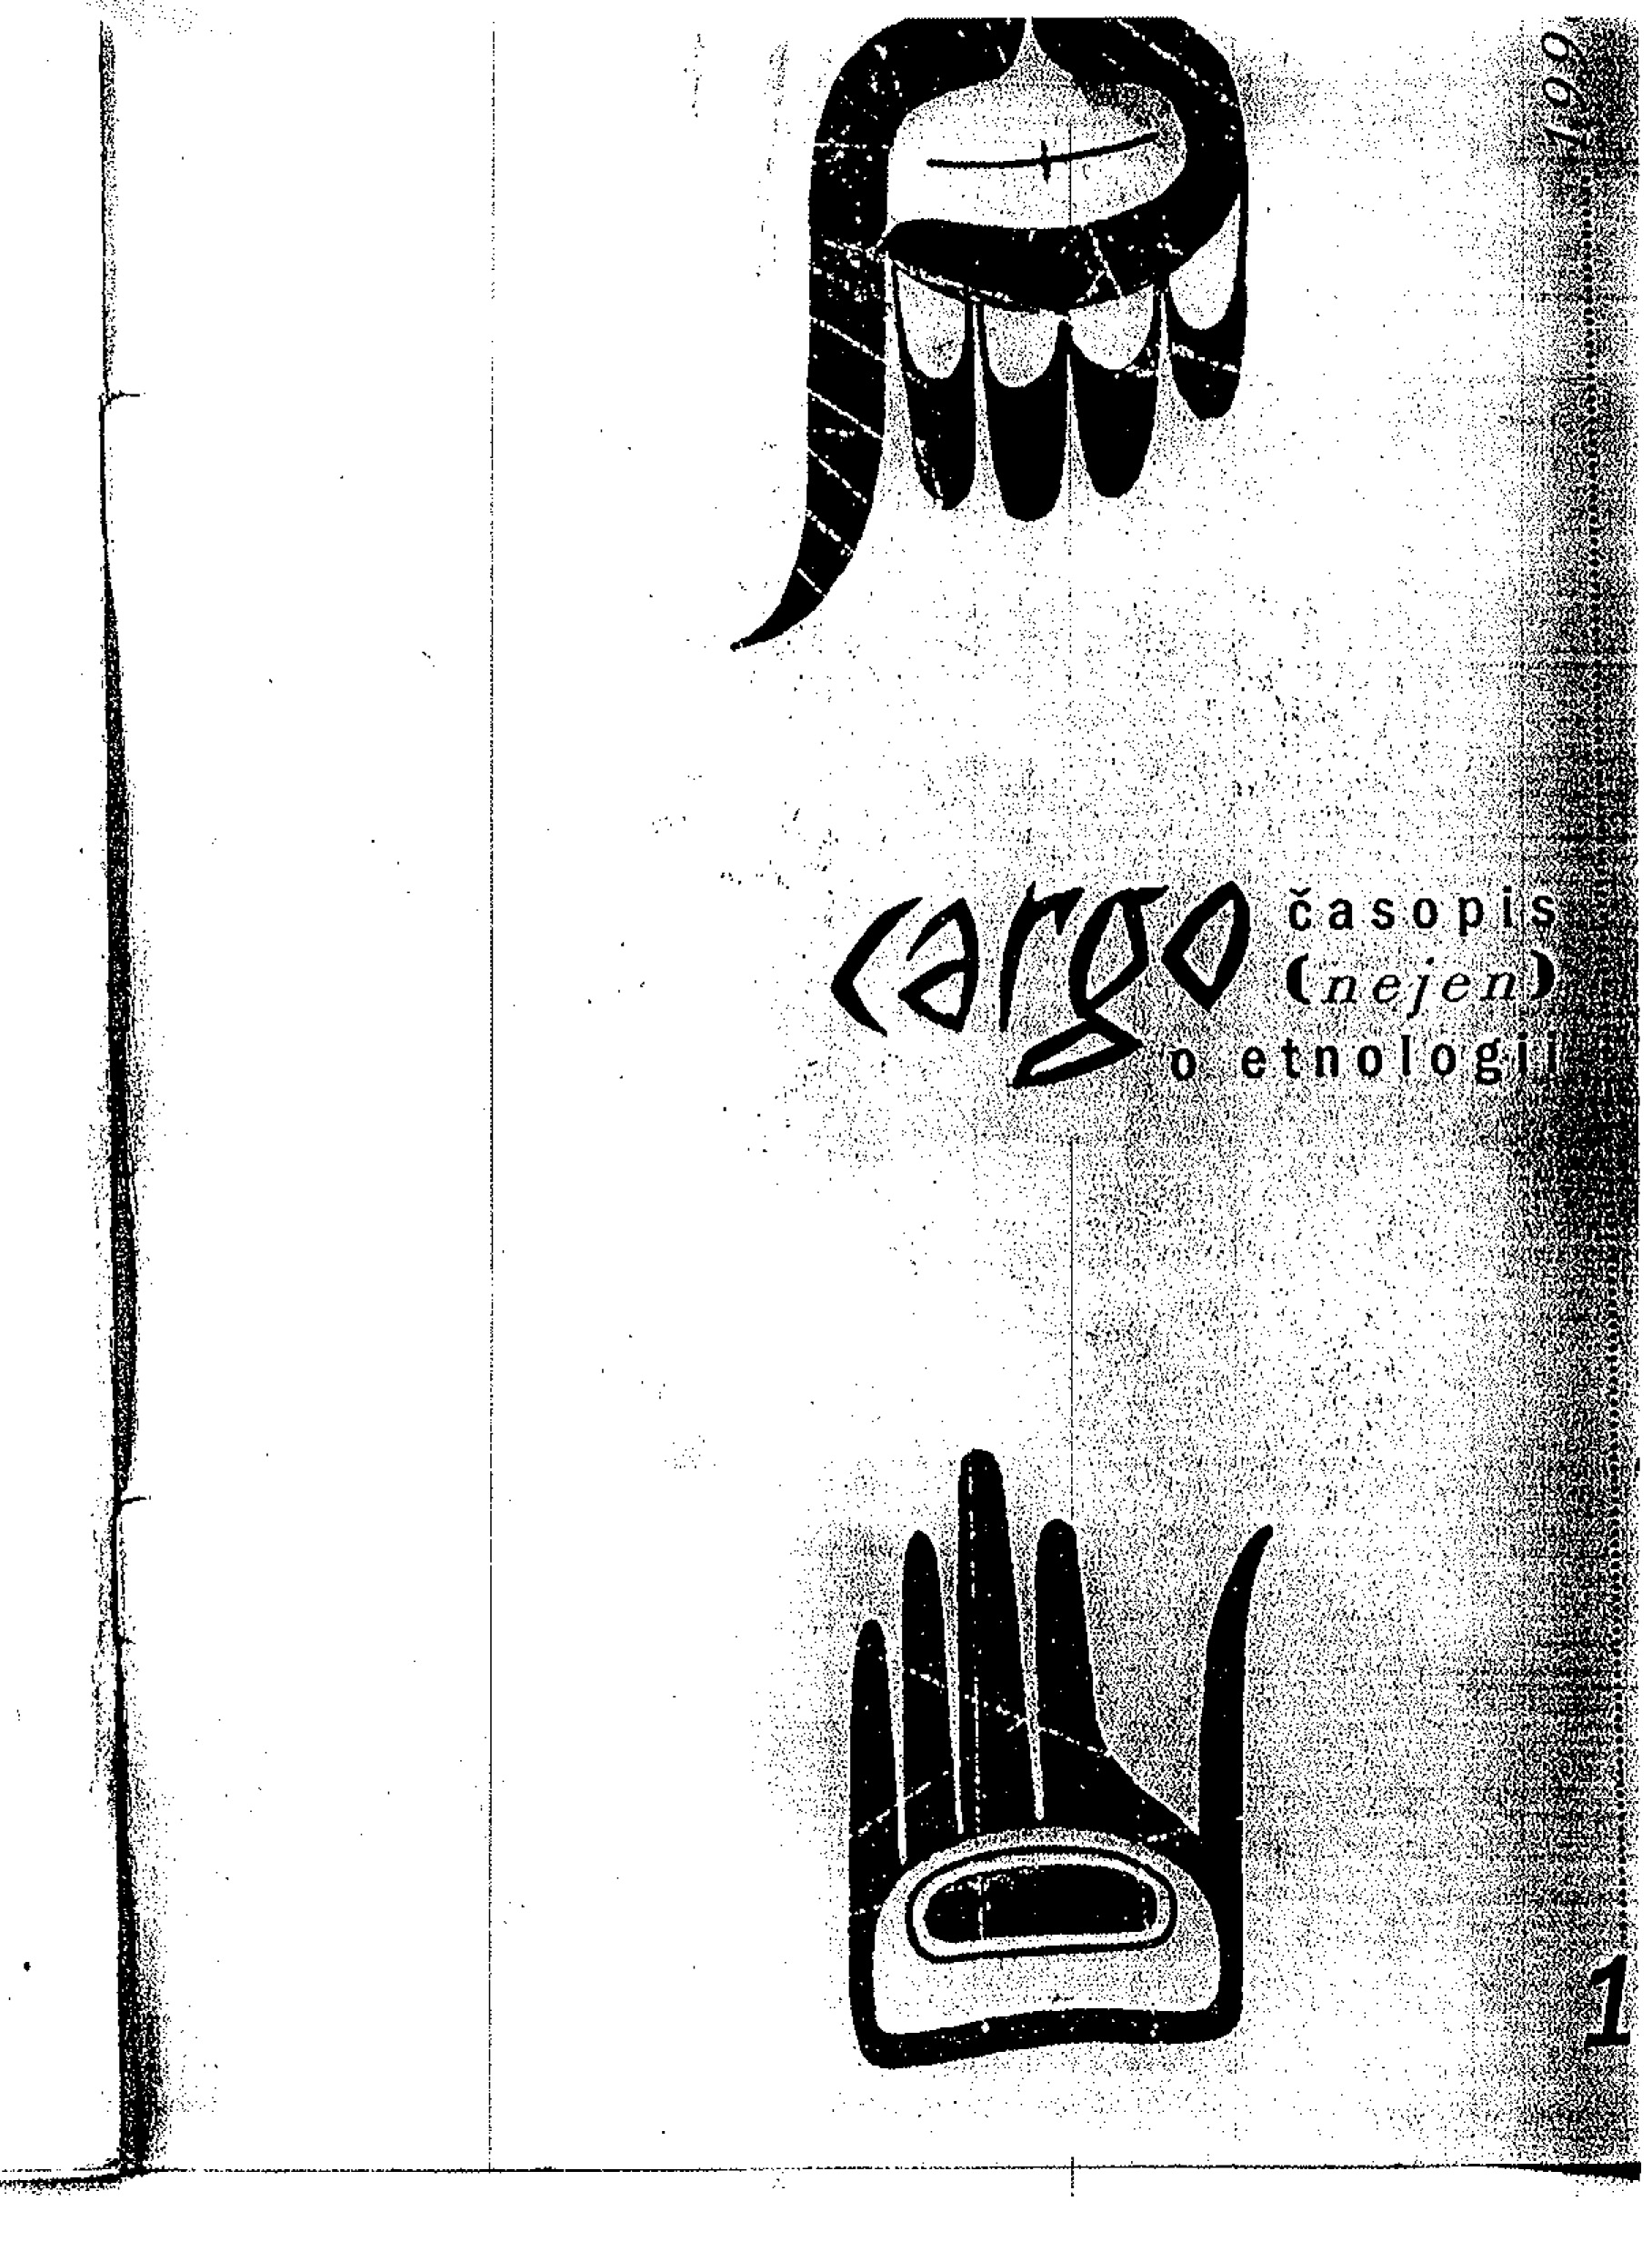 					View Vol. 1 No. 1 (1998): Cargo Journal
				